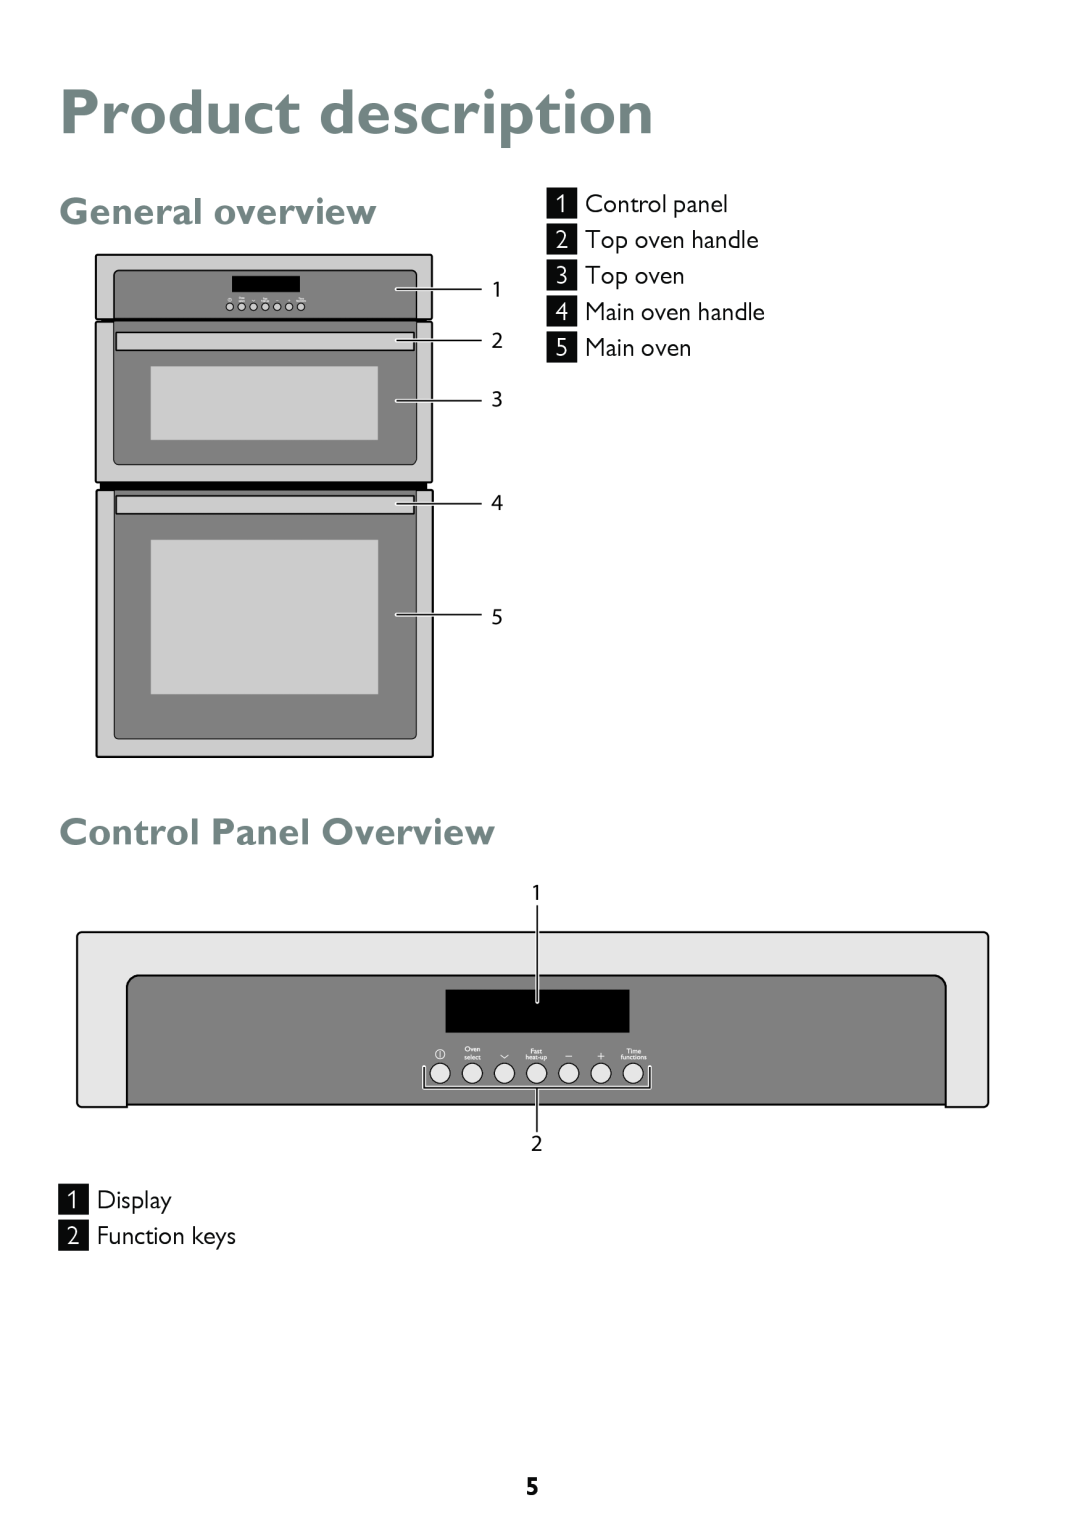 John Lewis JLBIDO913 Product description, General overview, Control Panel Overview, Control panel, Top oven handle 